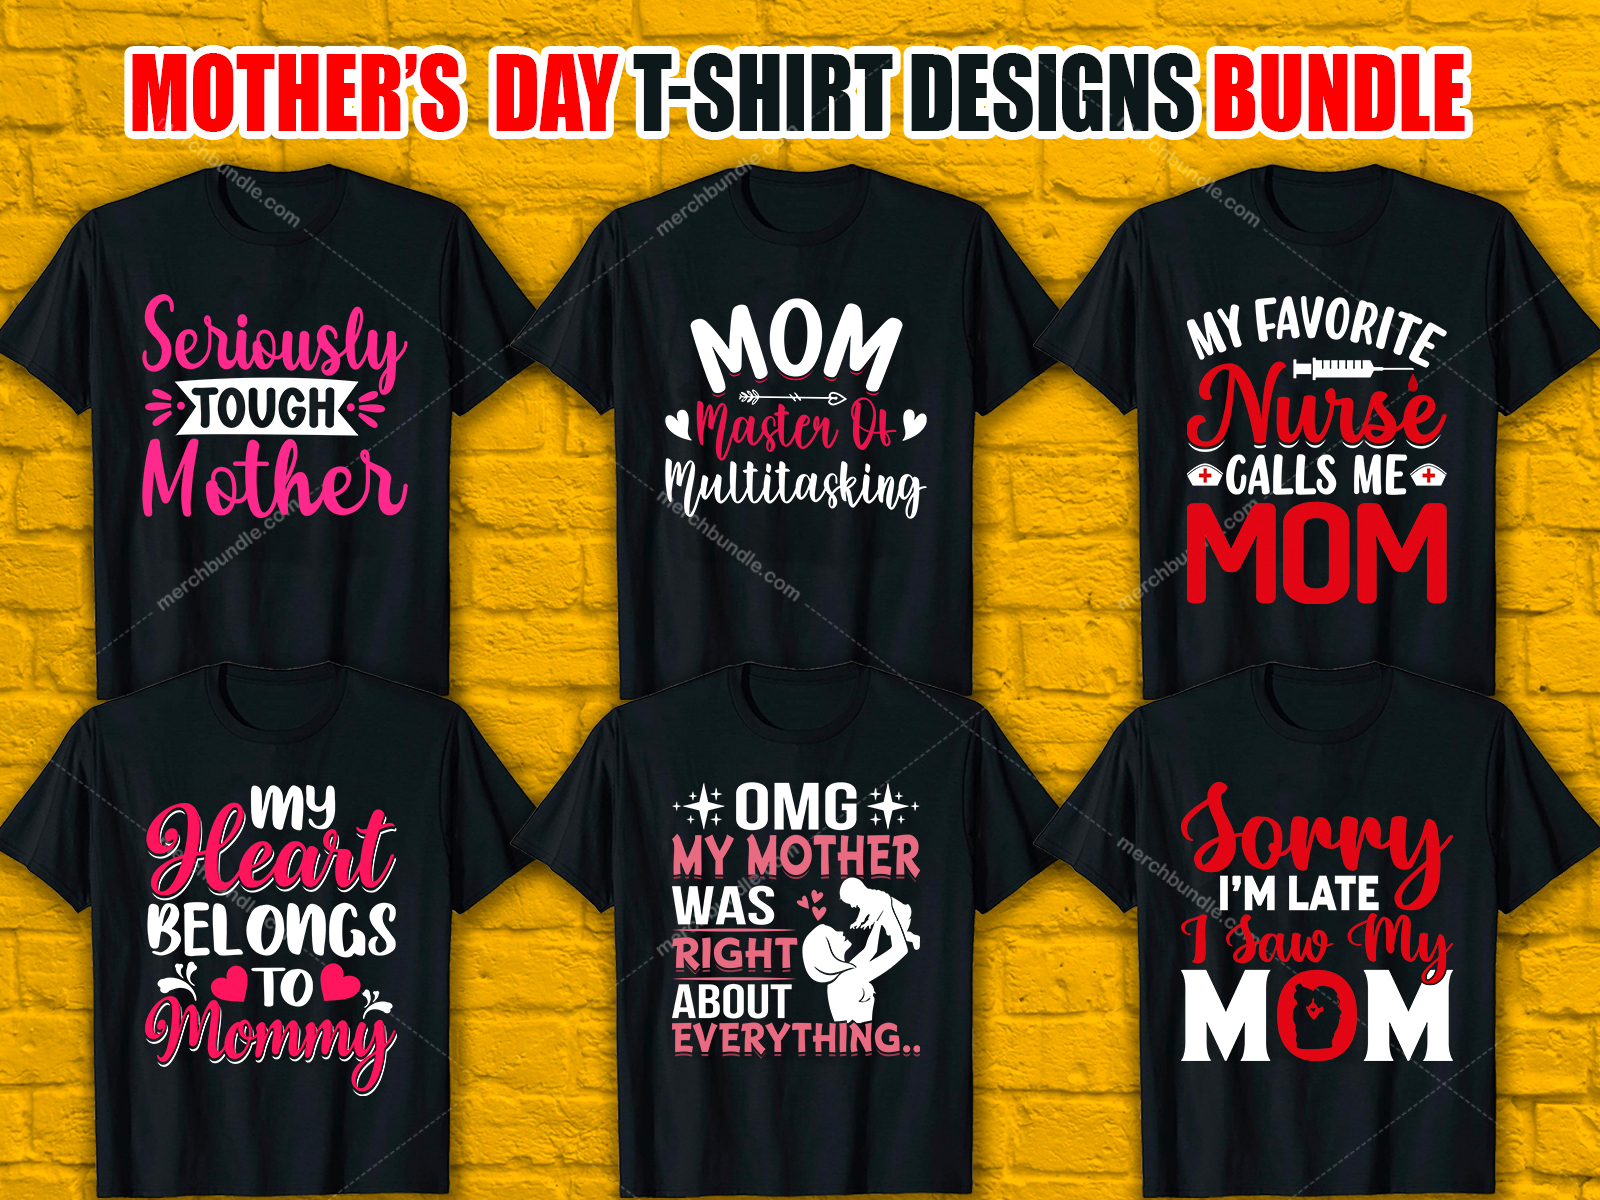 Mother's Day T-Shirt Design Bundle by Kabita Akter on Dribbble